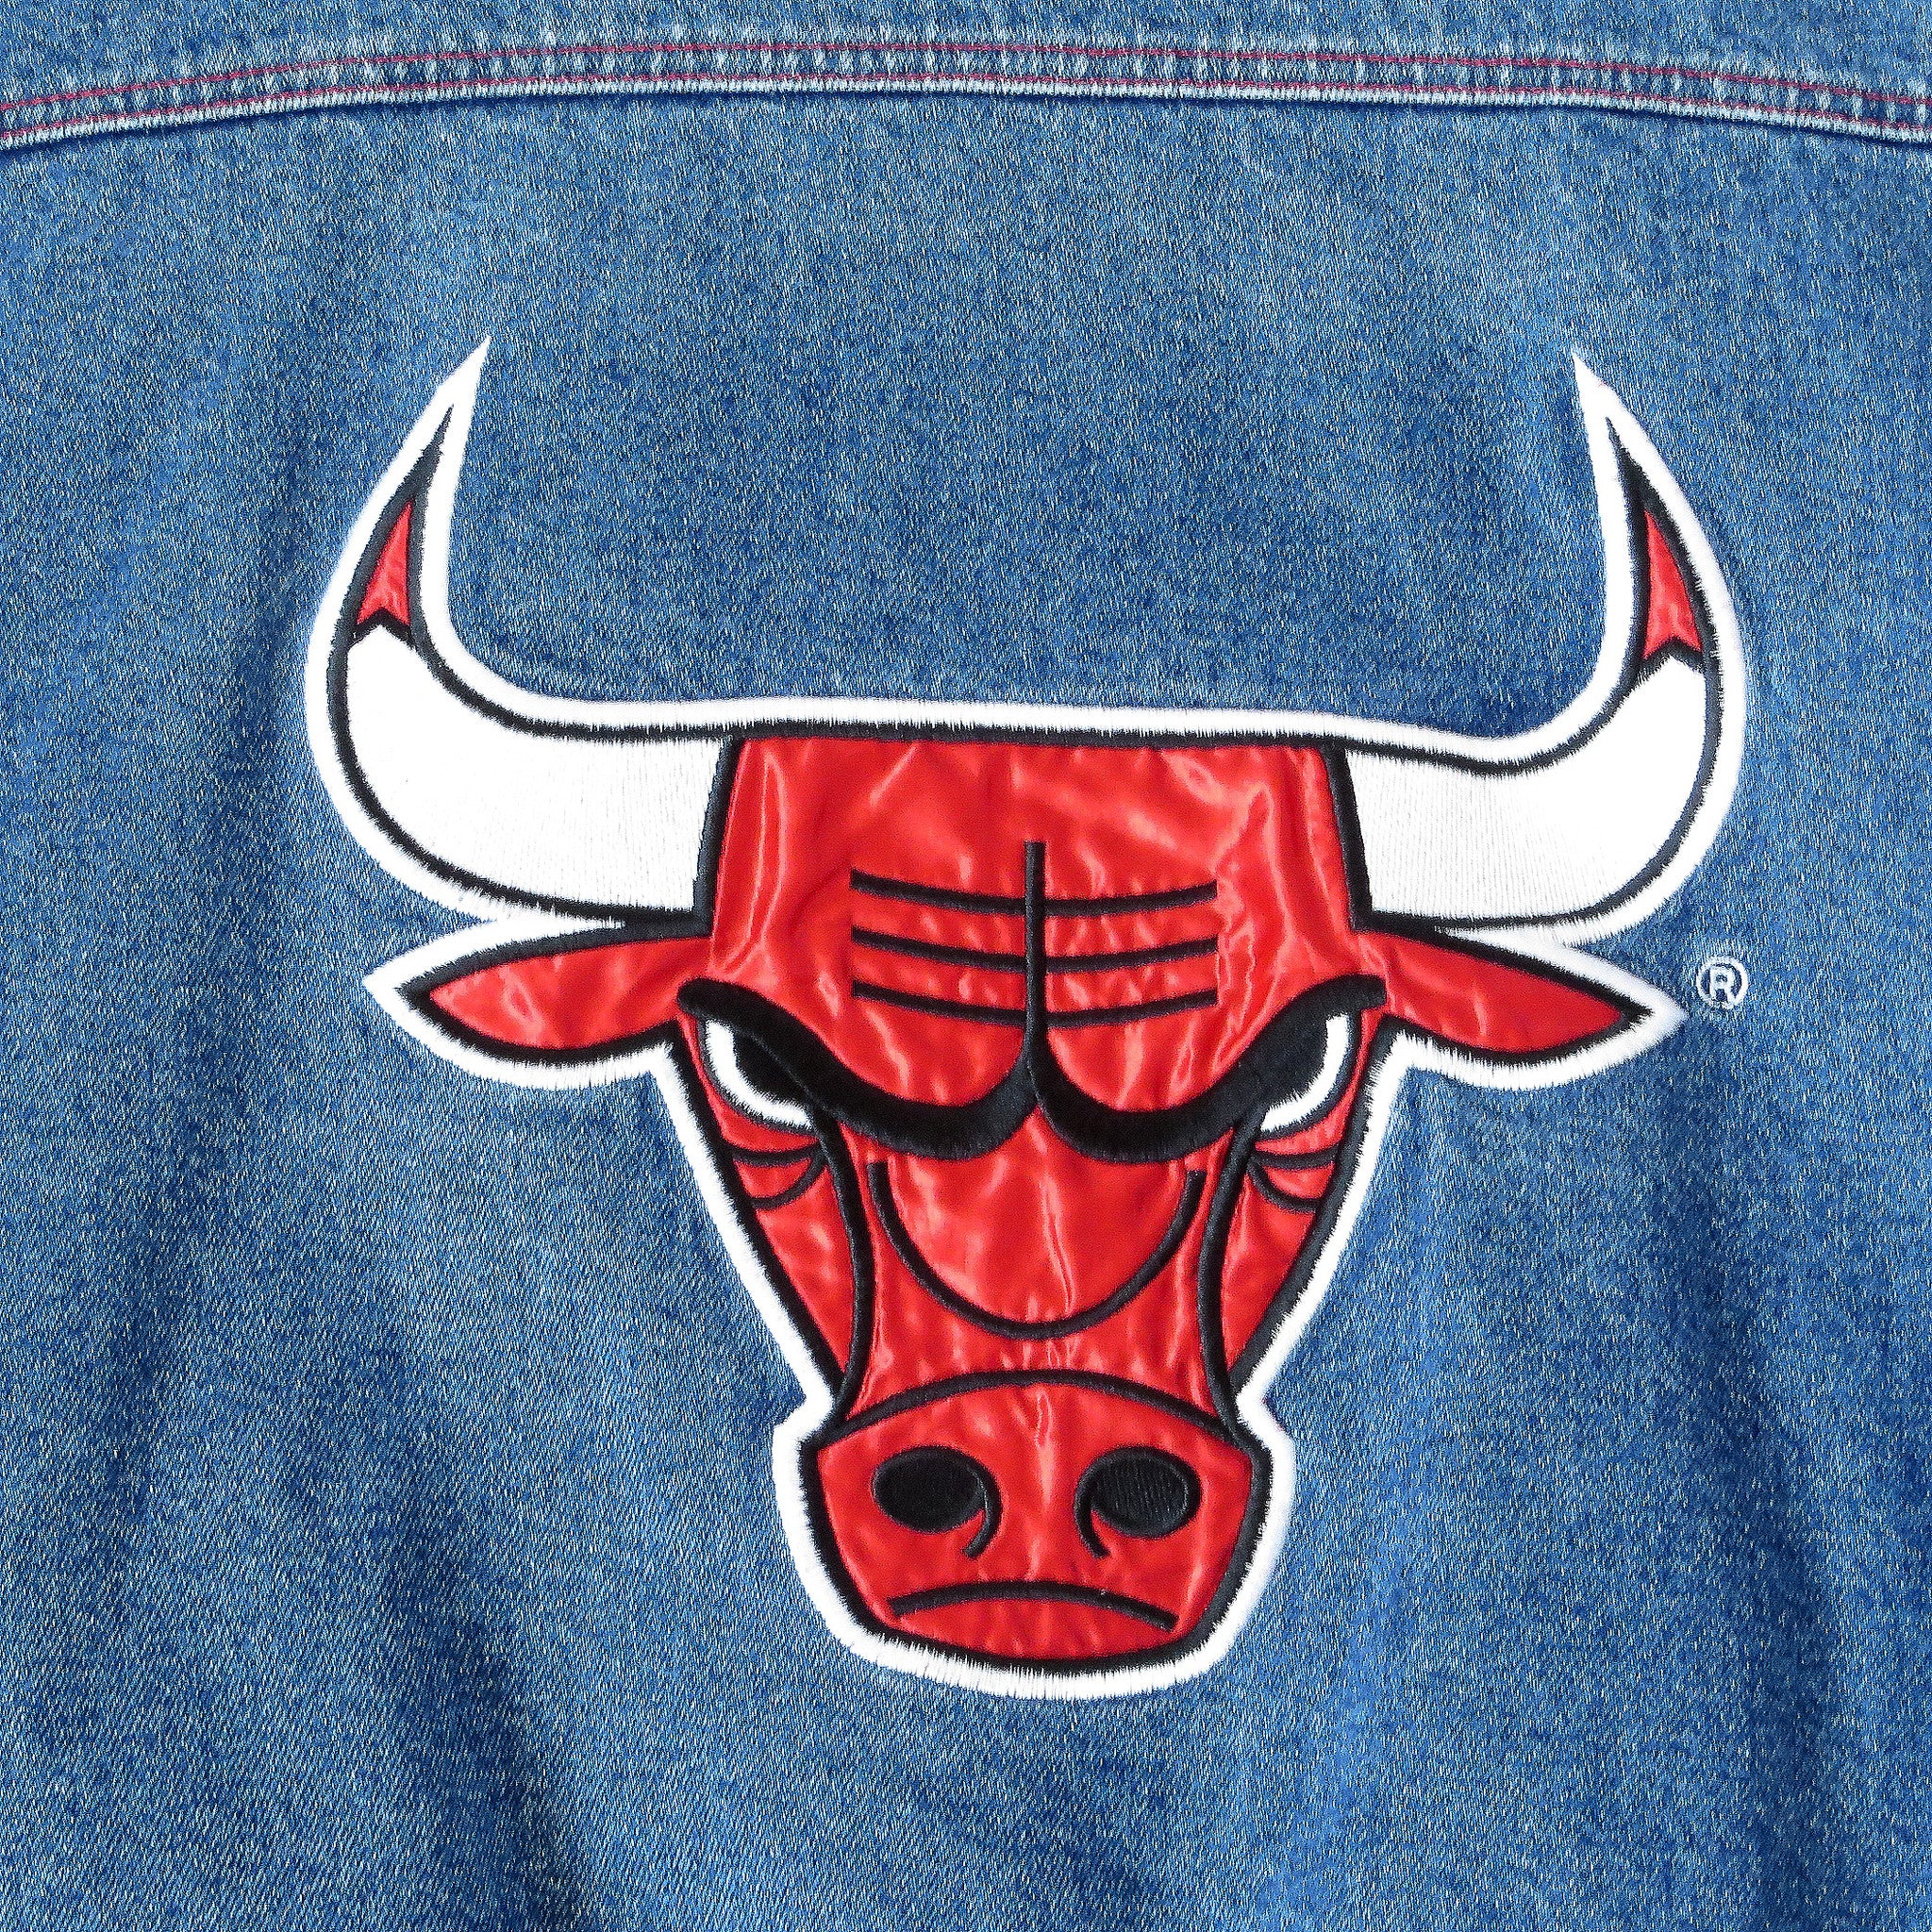 Vintage Chicago Bulls Denim Starter Jacket Sz XL